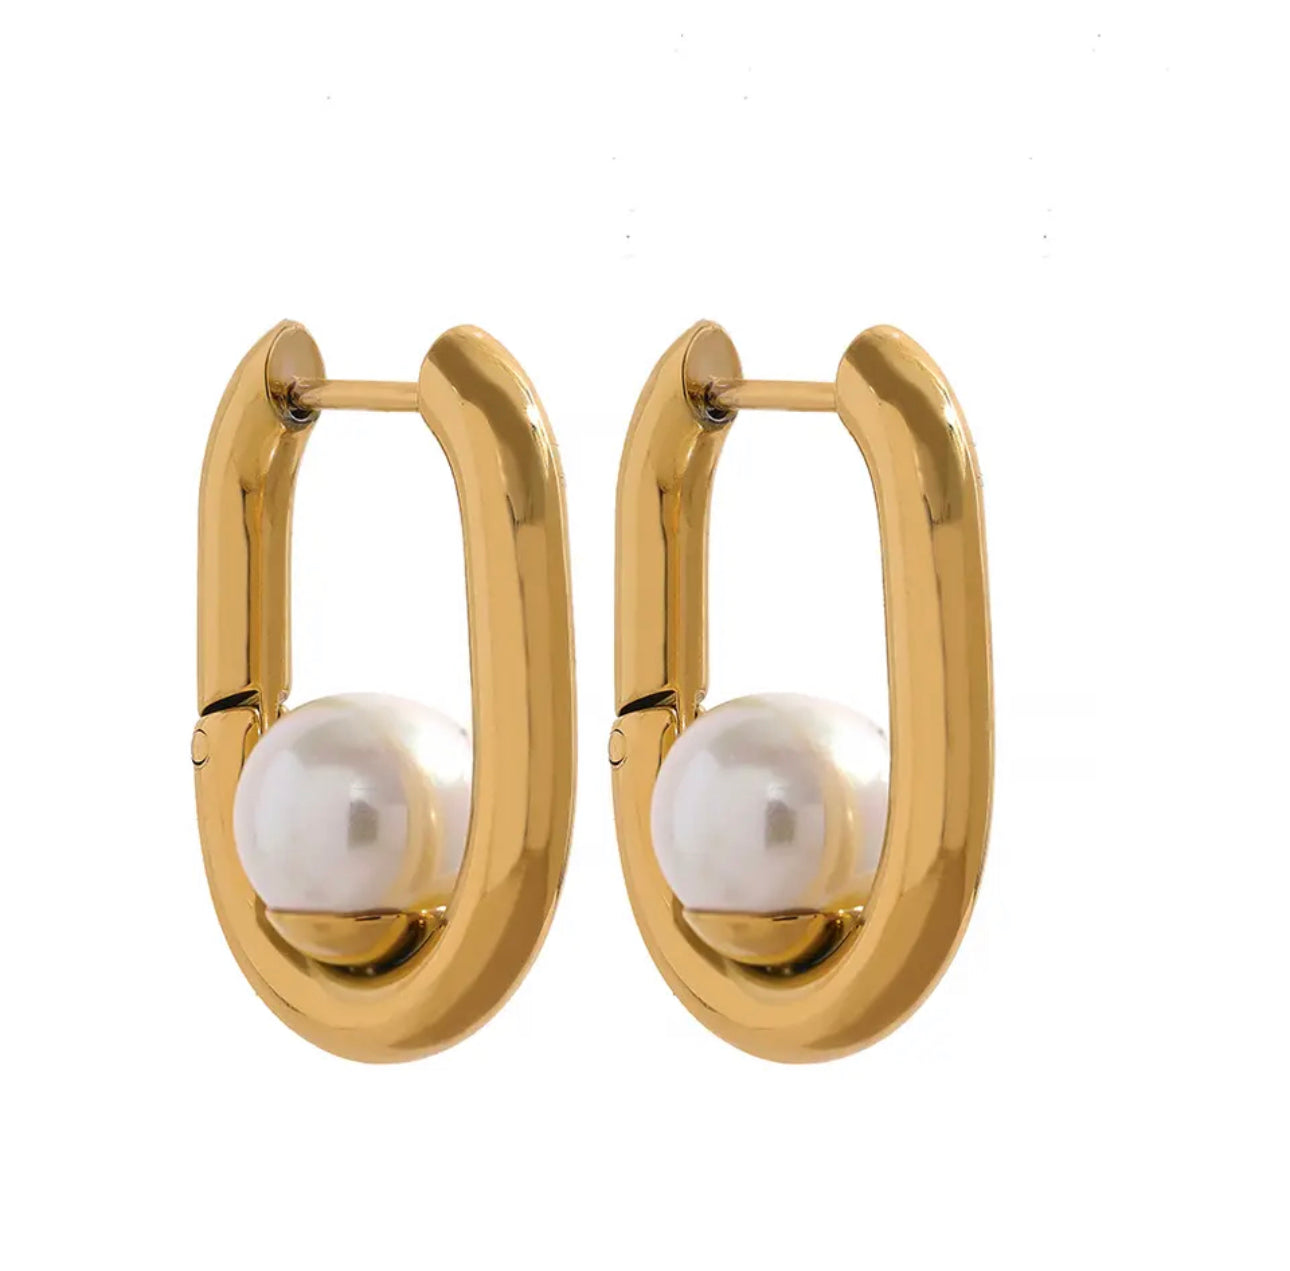 Erika Williner Designs - Eva earrings